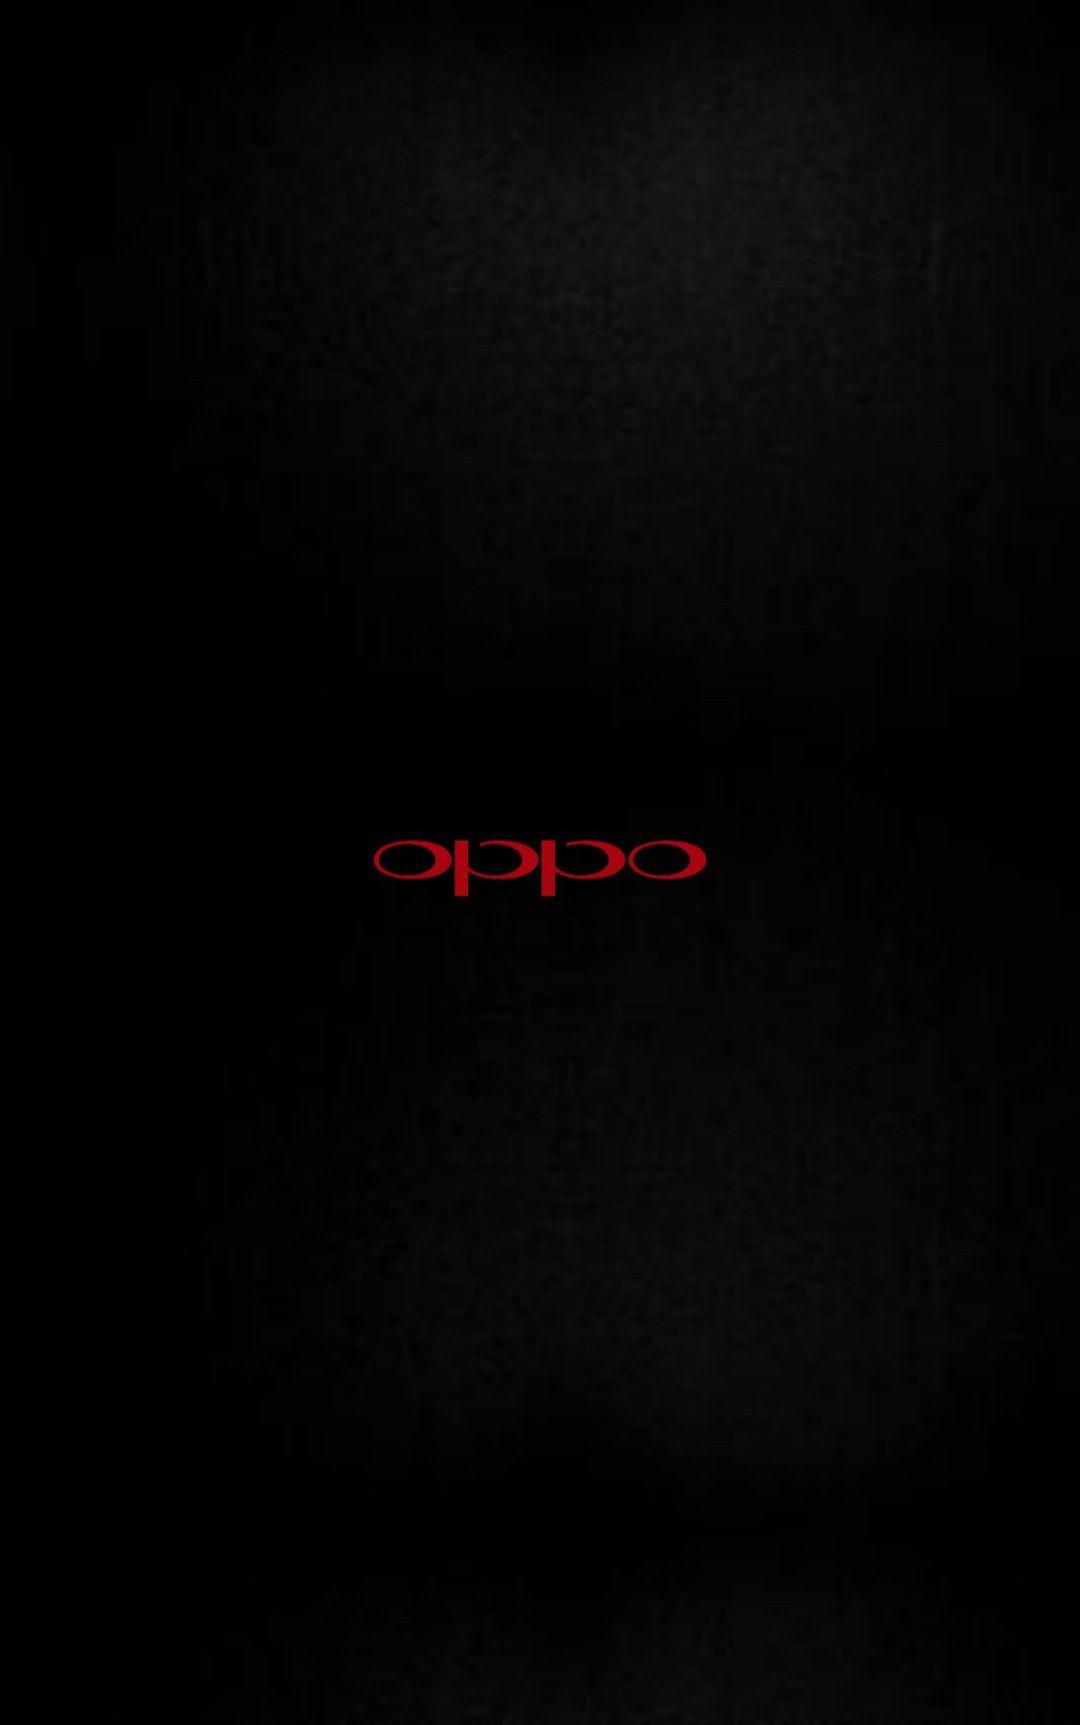 Oppo Logo Wallpapers - Top Free Oppo ...